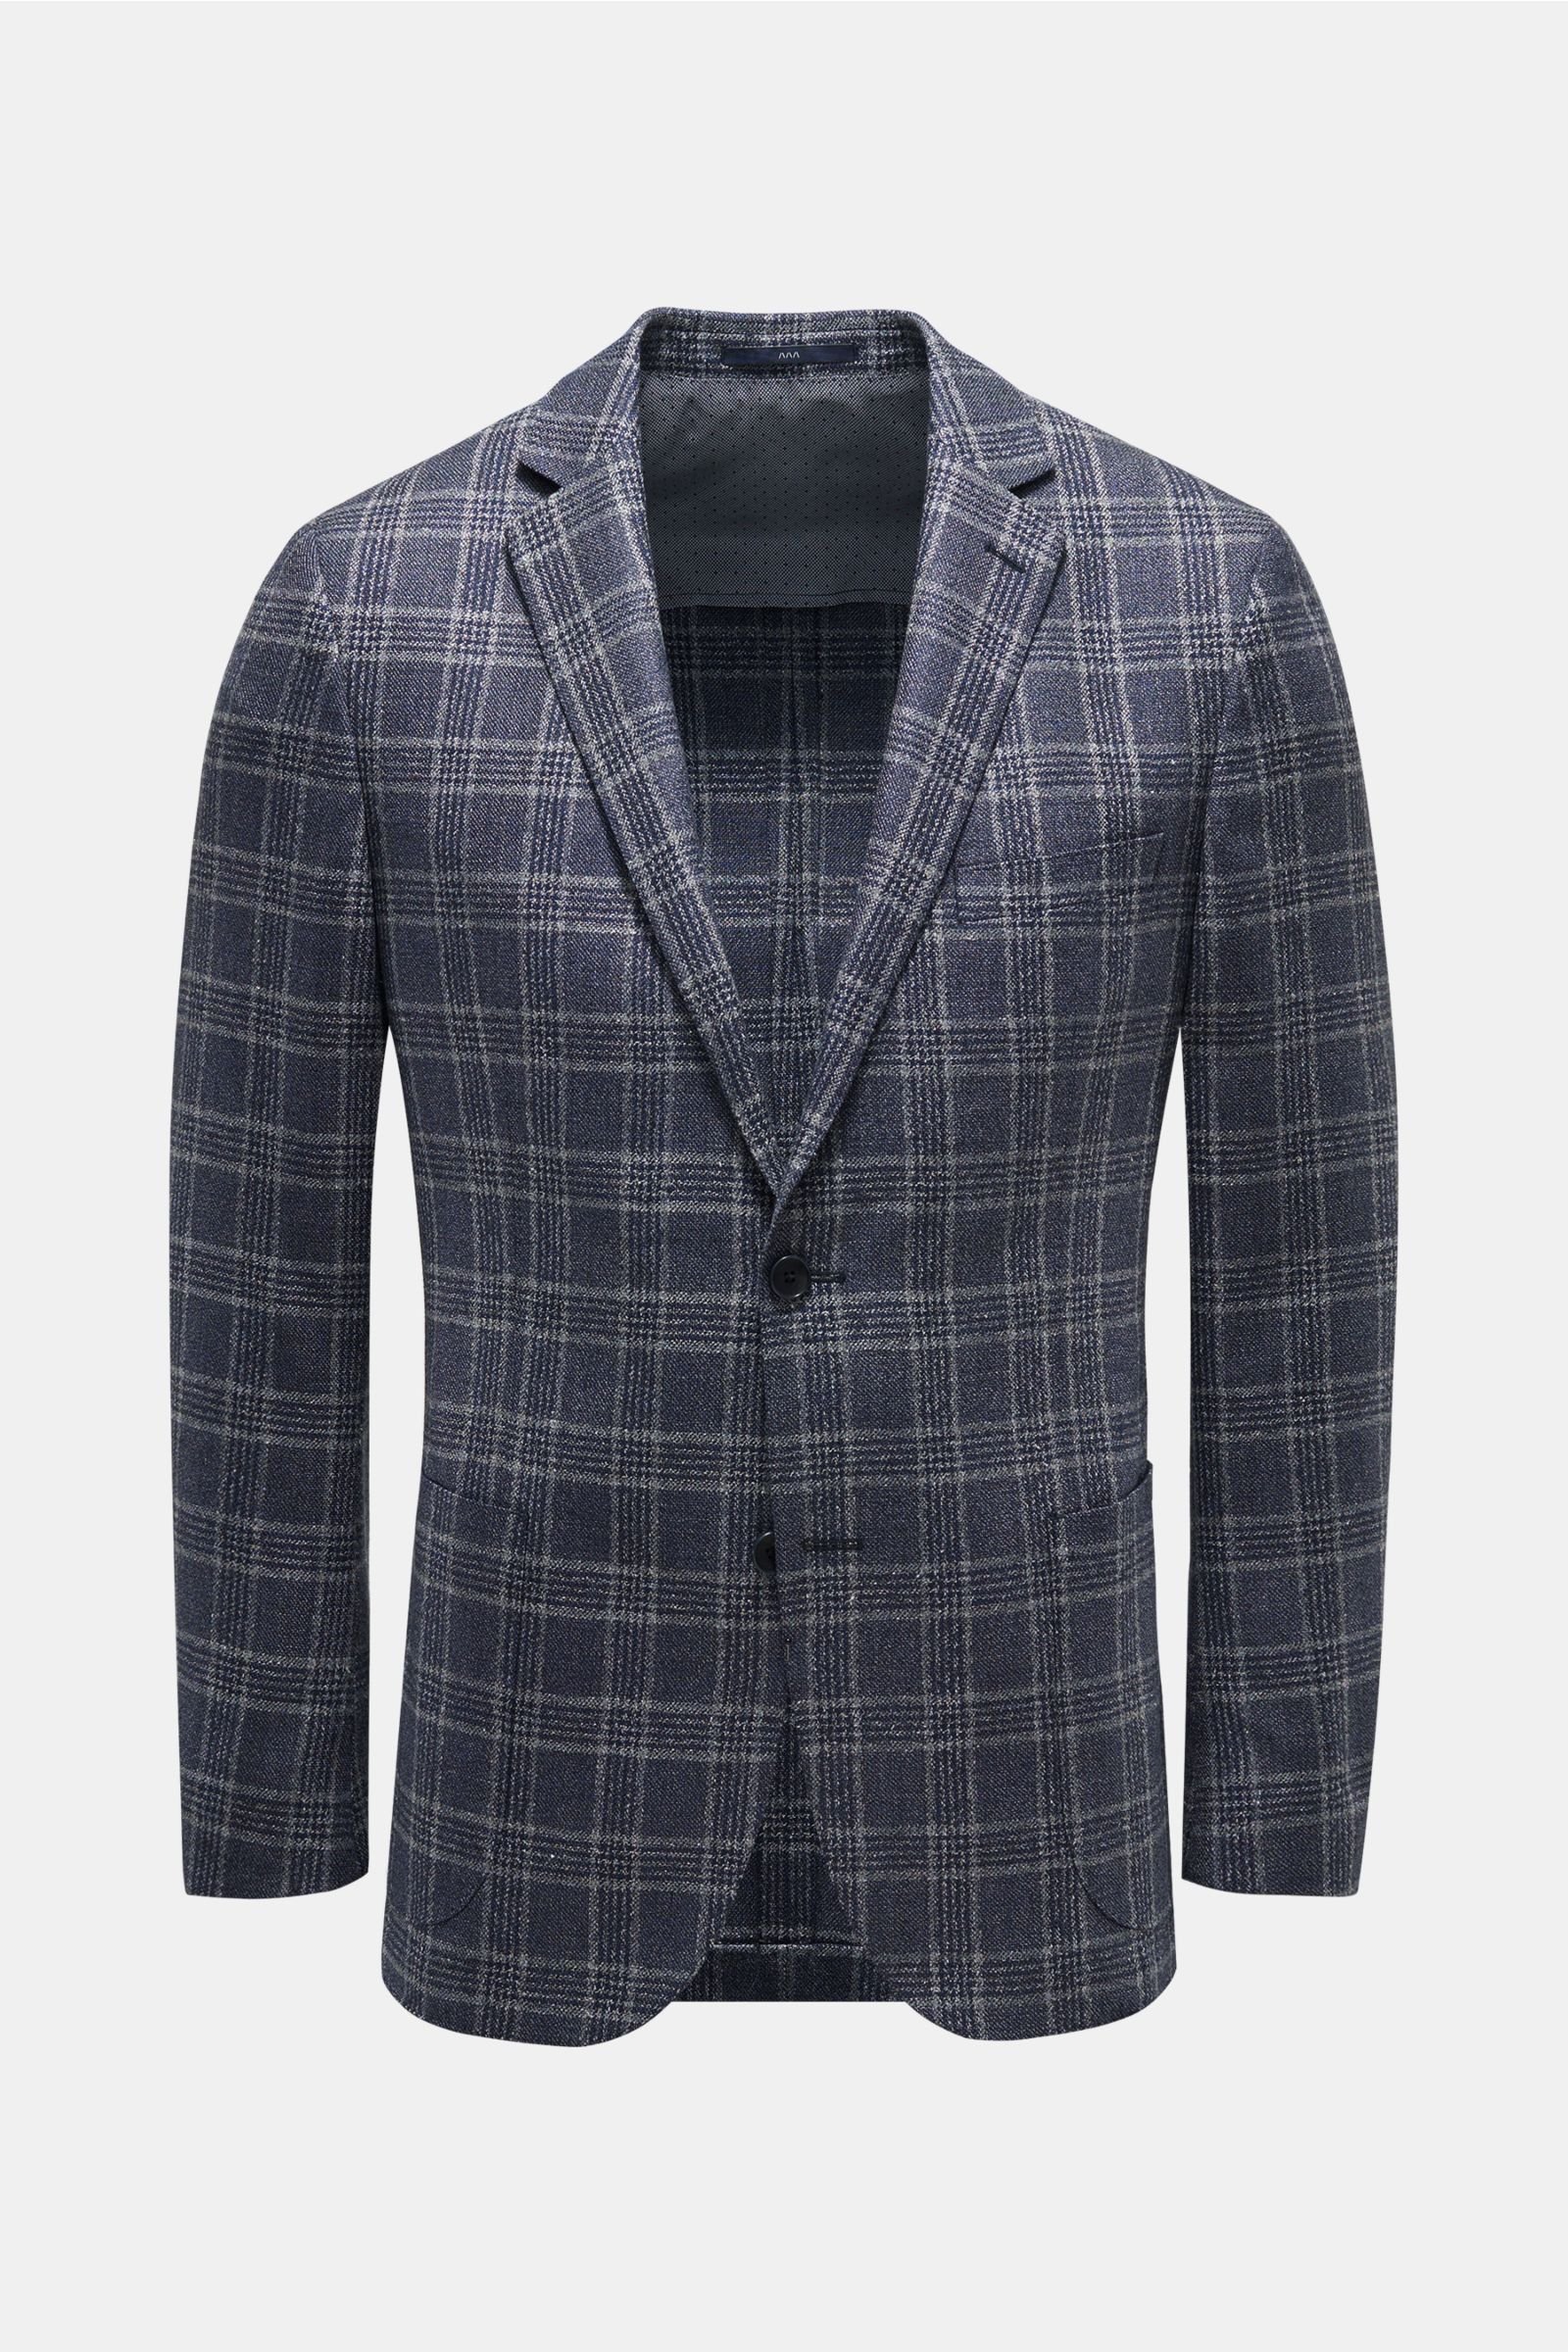 Smart-casual jacket 'Sendrik' navy/grey checked